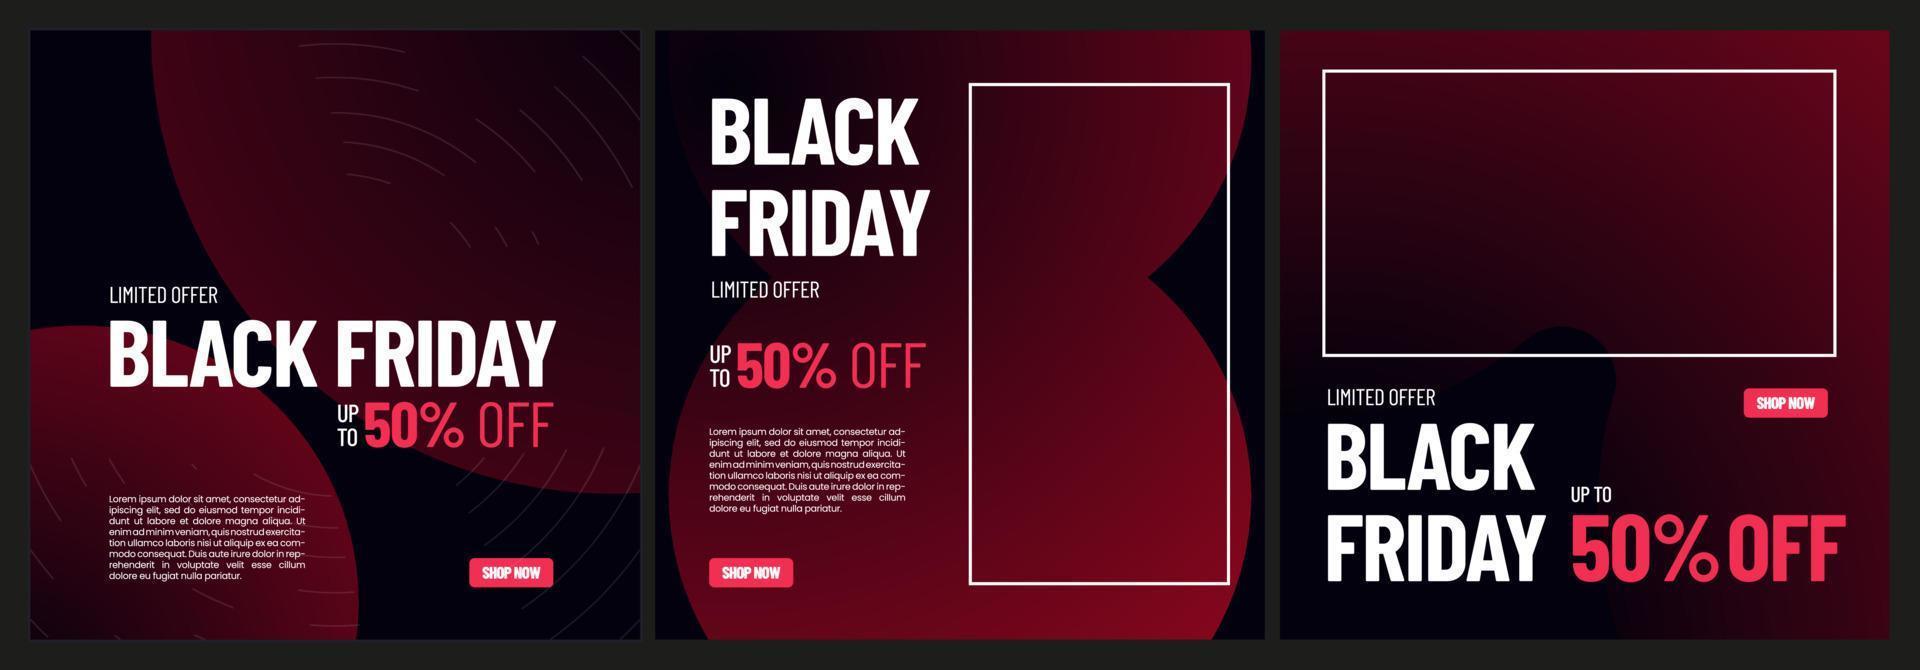 Black friday sale social media banner template vector